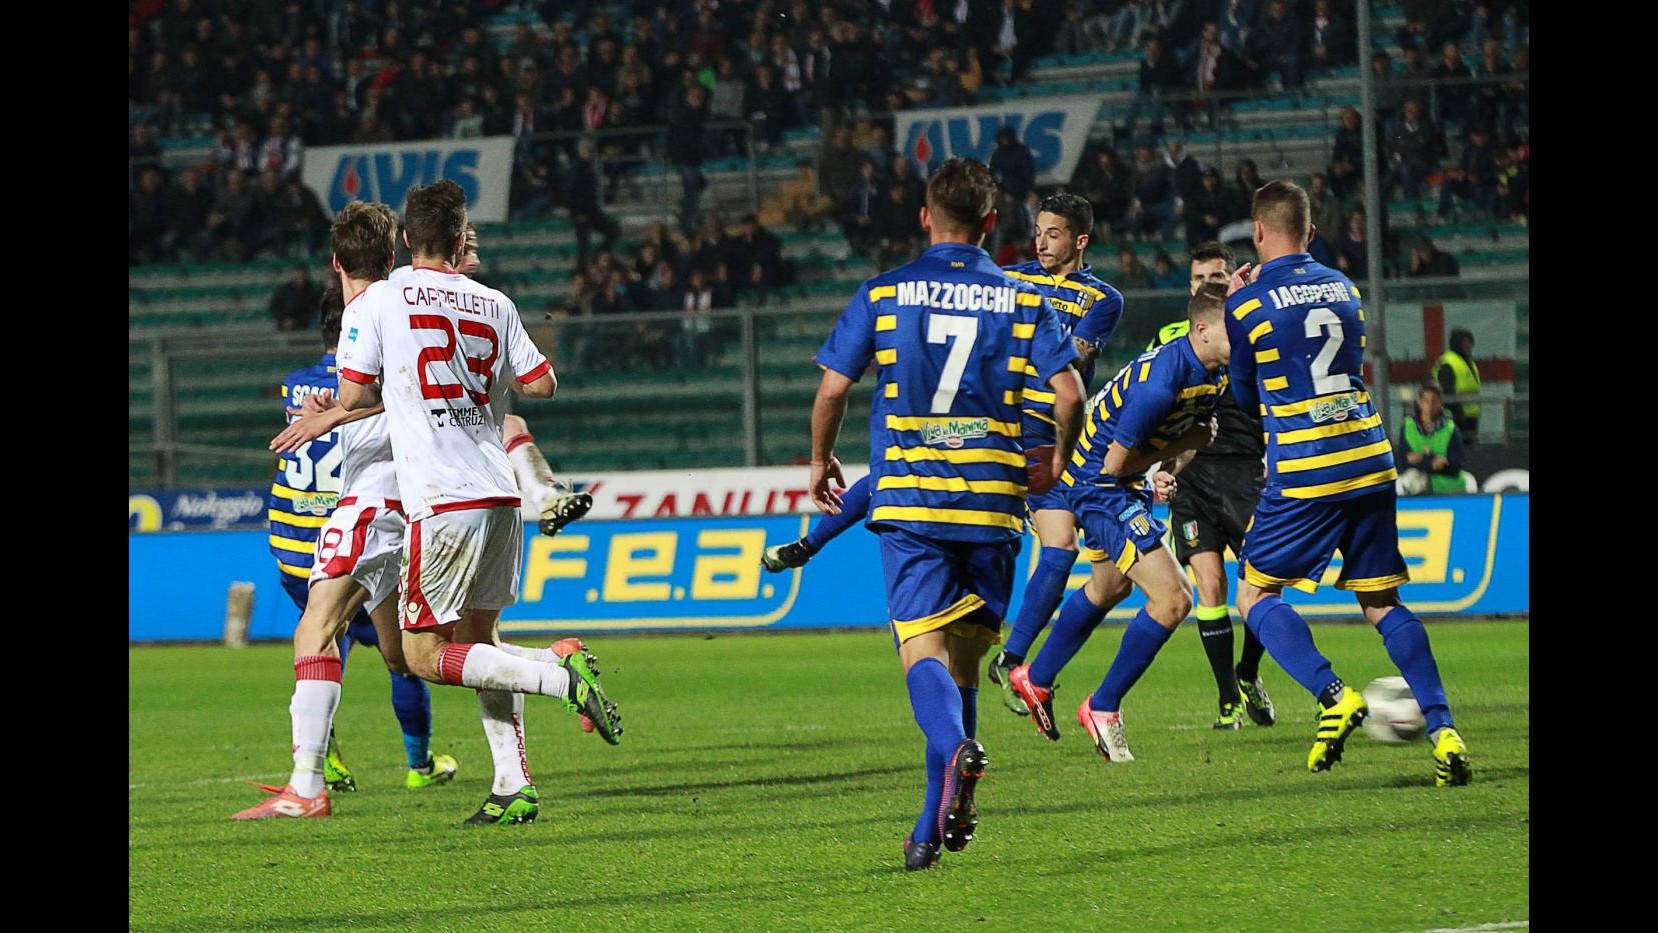 FOTO LegaPro, Parma corsaro, a Padova vince 2-1